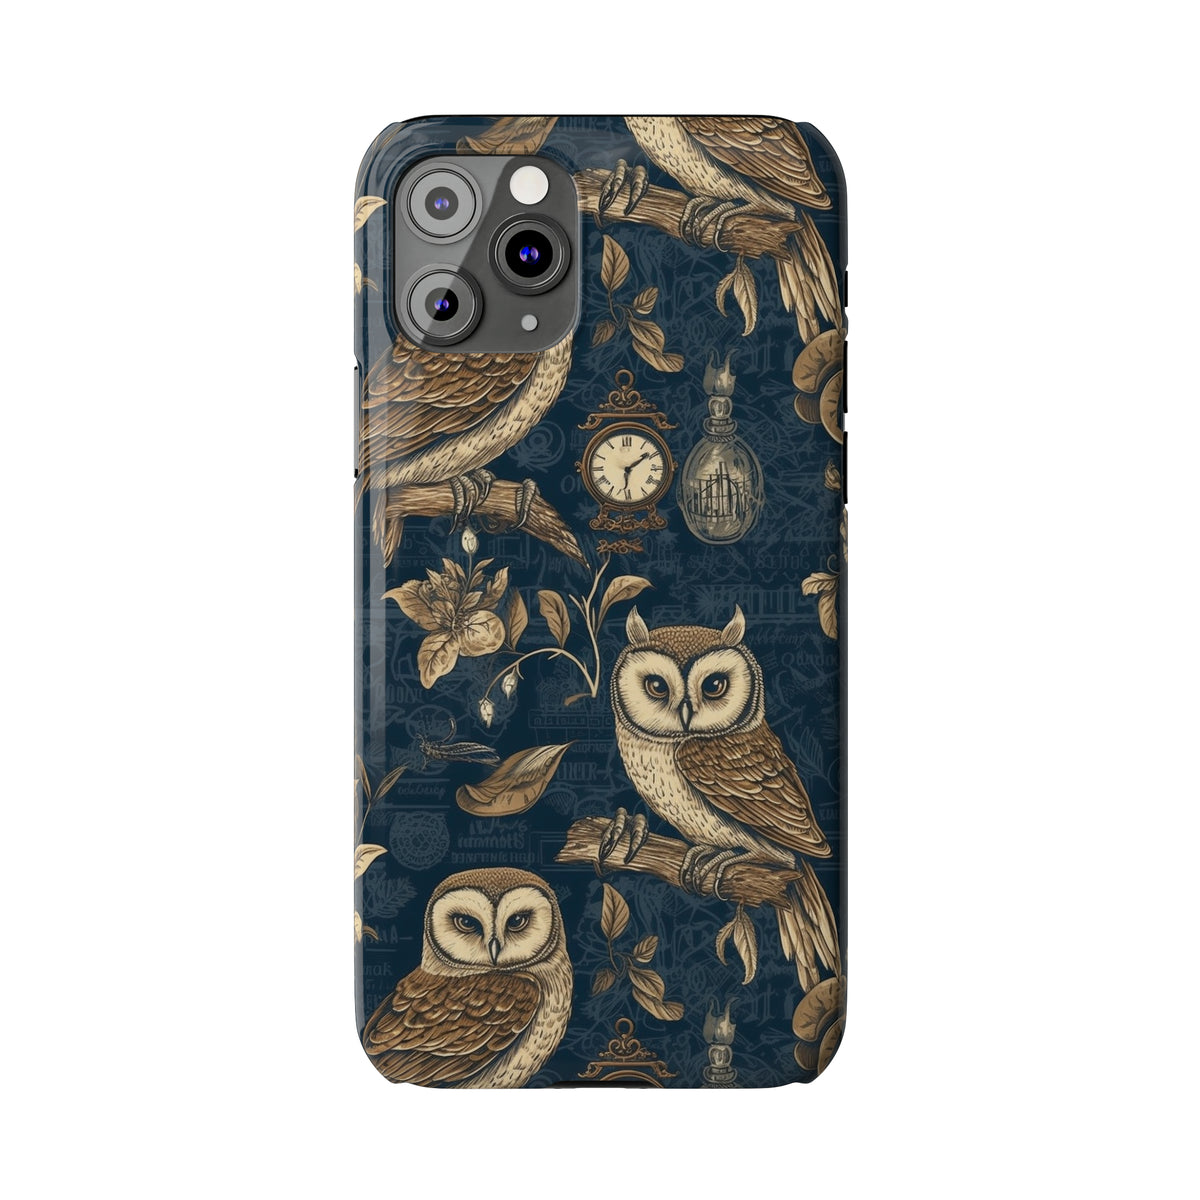 Vintage Owl Wizarding Books  Phone Case